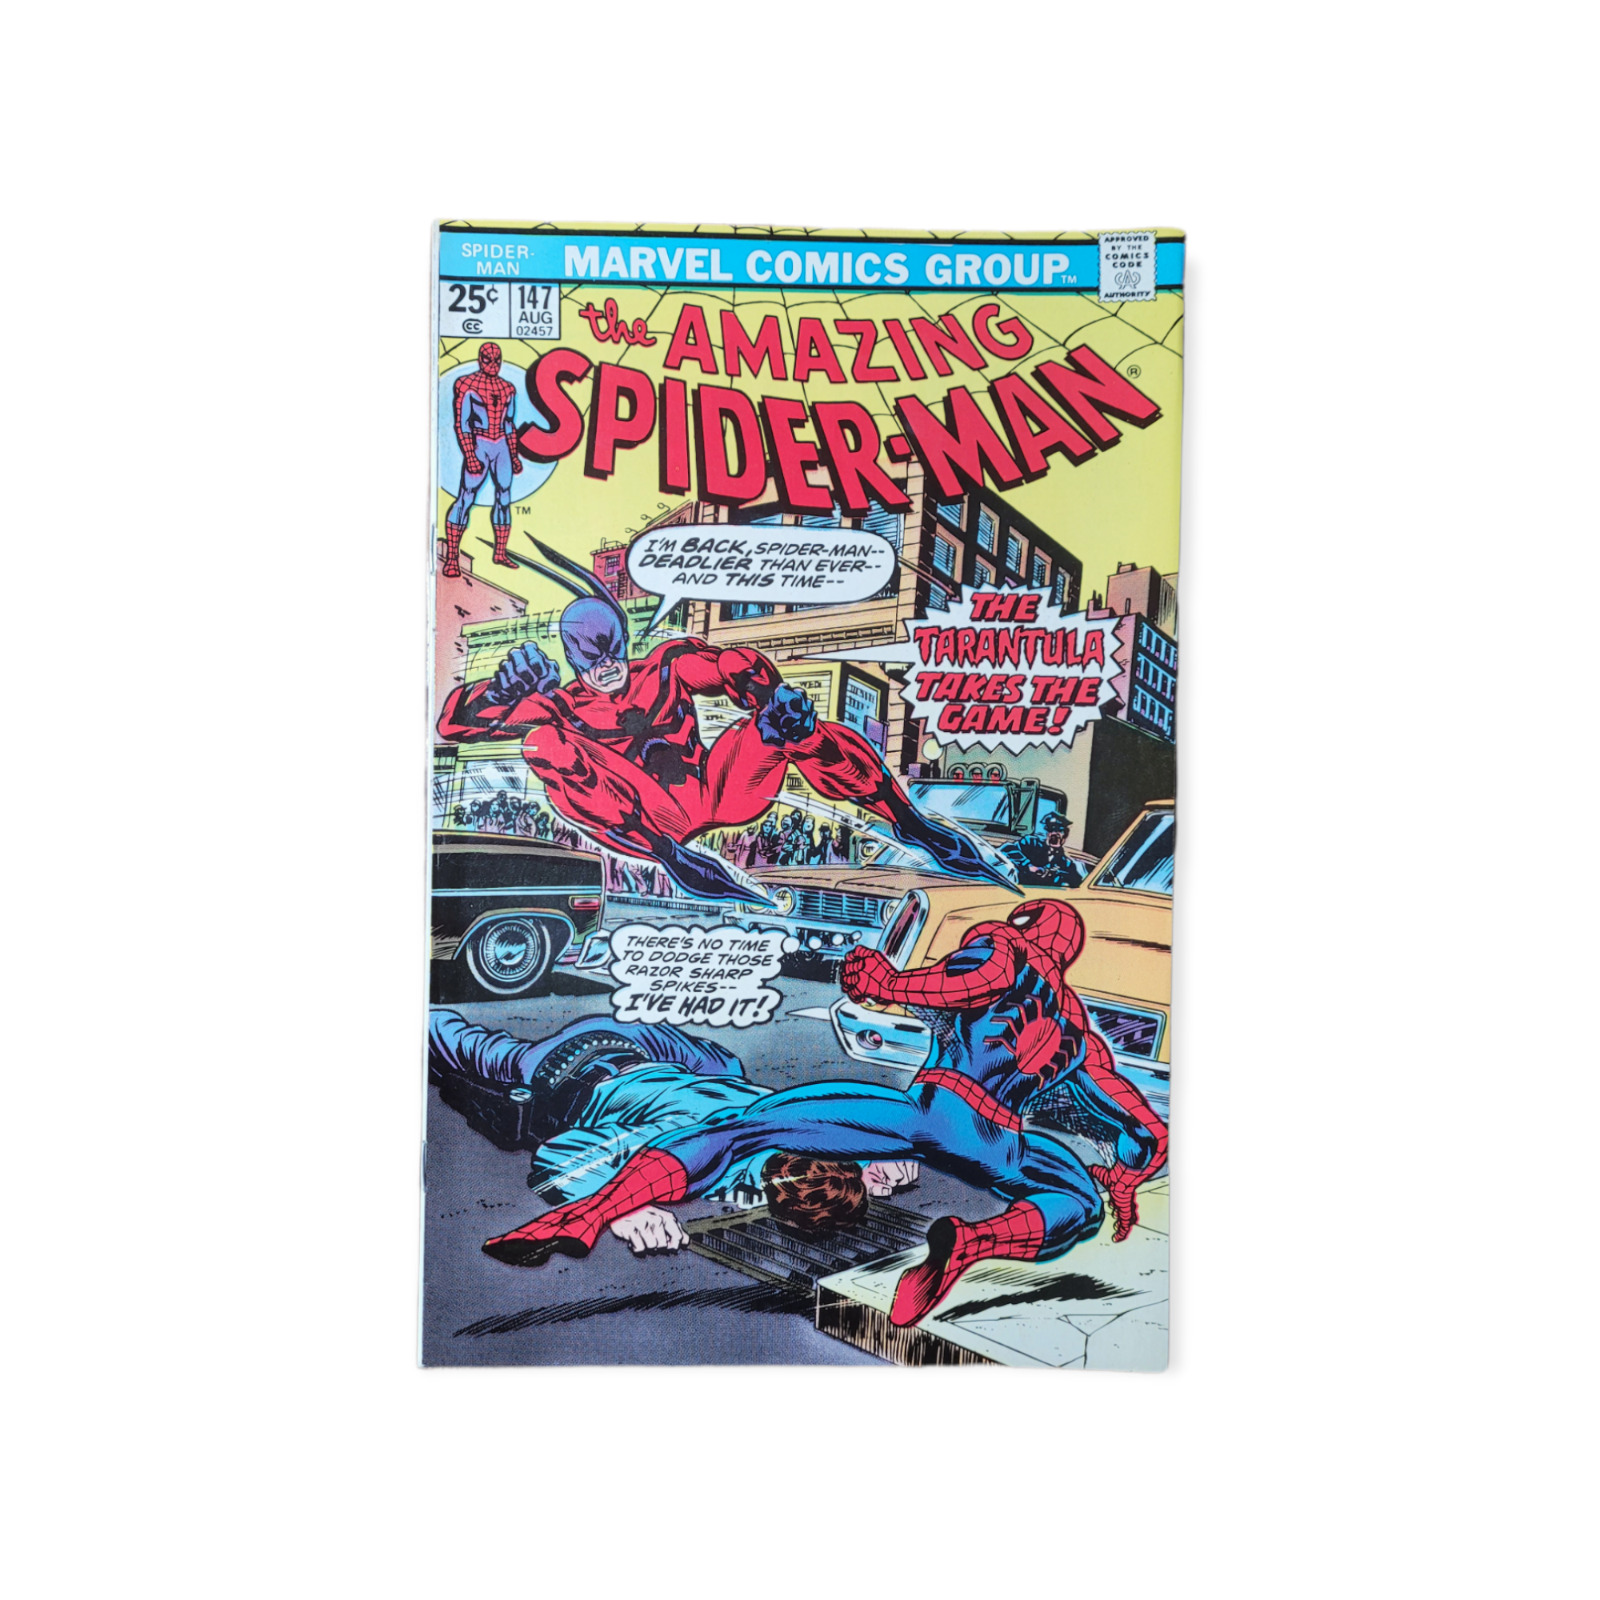 THE AMAZING SPIDER-MAN #147 TARANTULA COVER CLONE STORY BRONZE VF-/VF RAW MARVEL